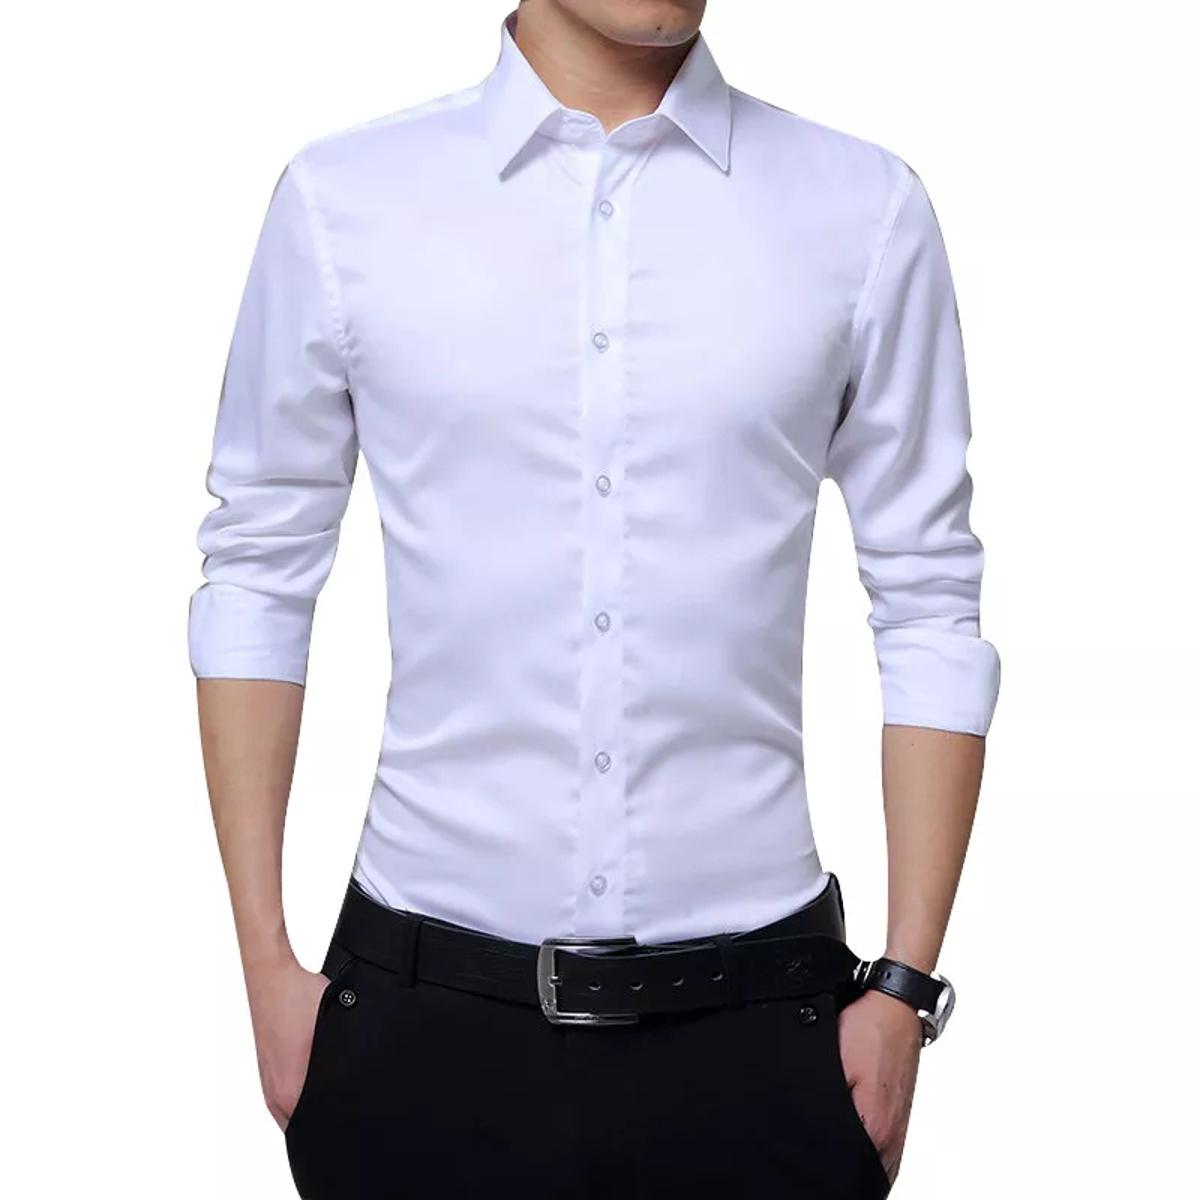 White Shirts For Men - Flex House - Home Improvement Ideas & Tips